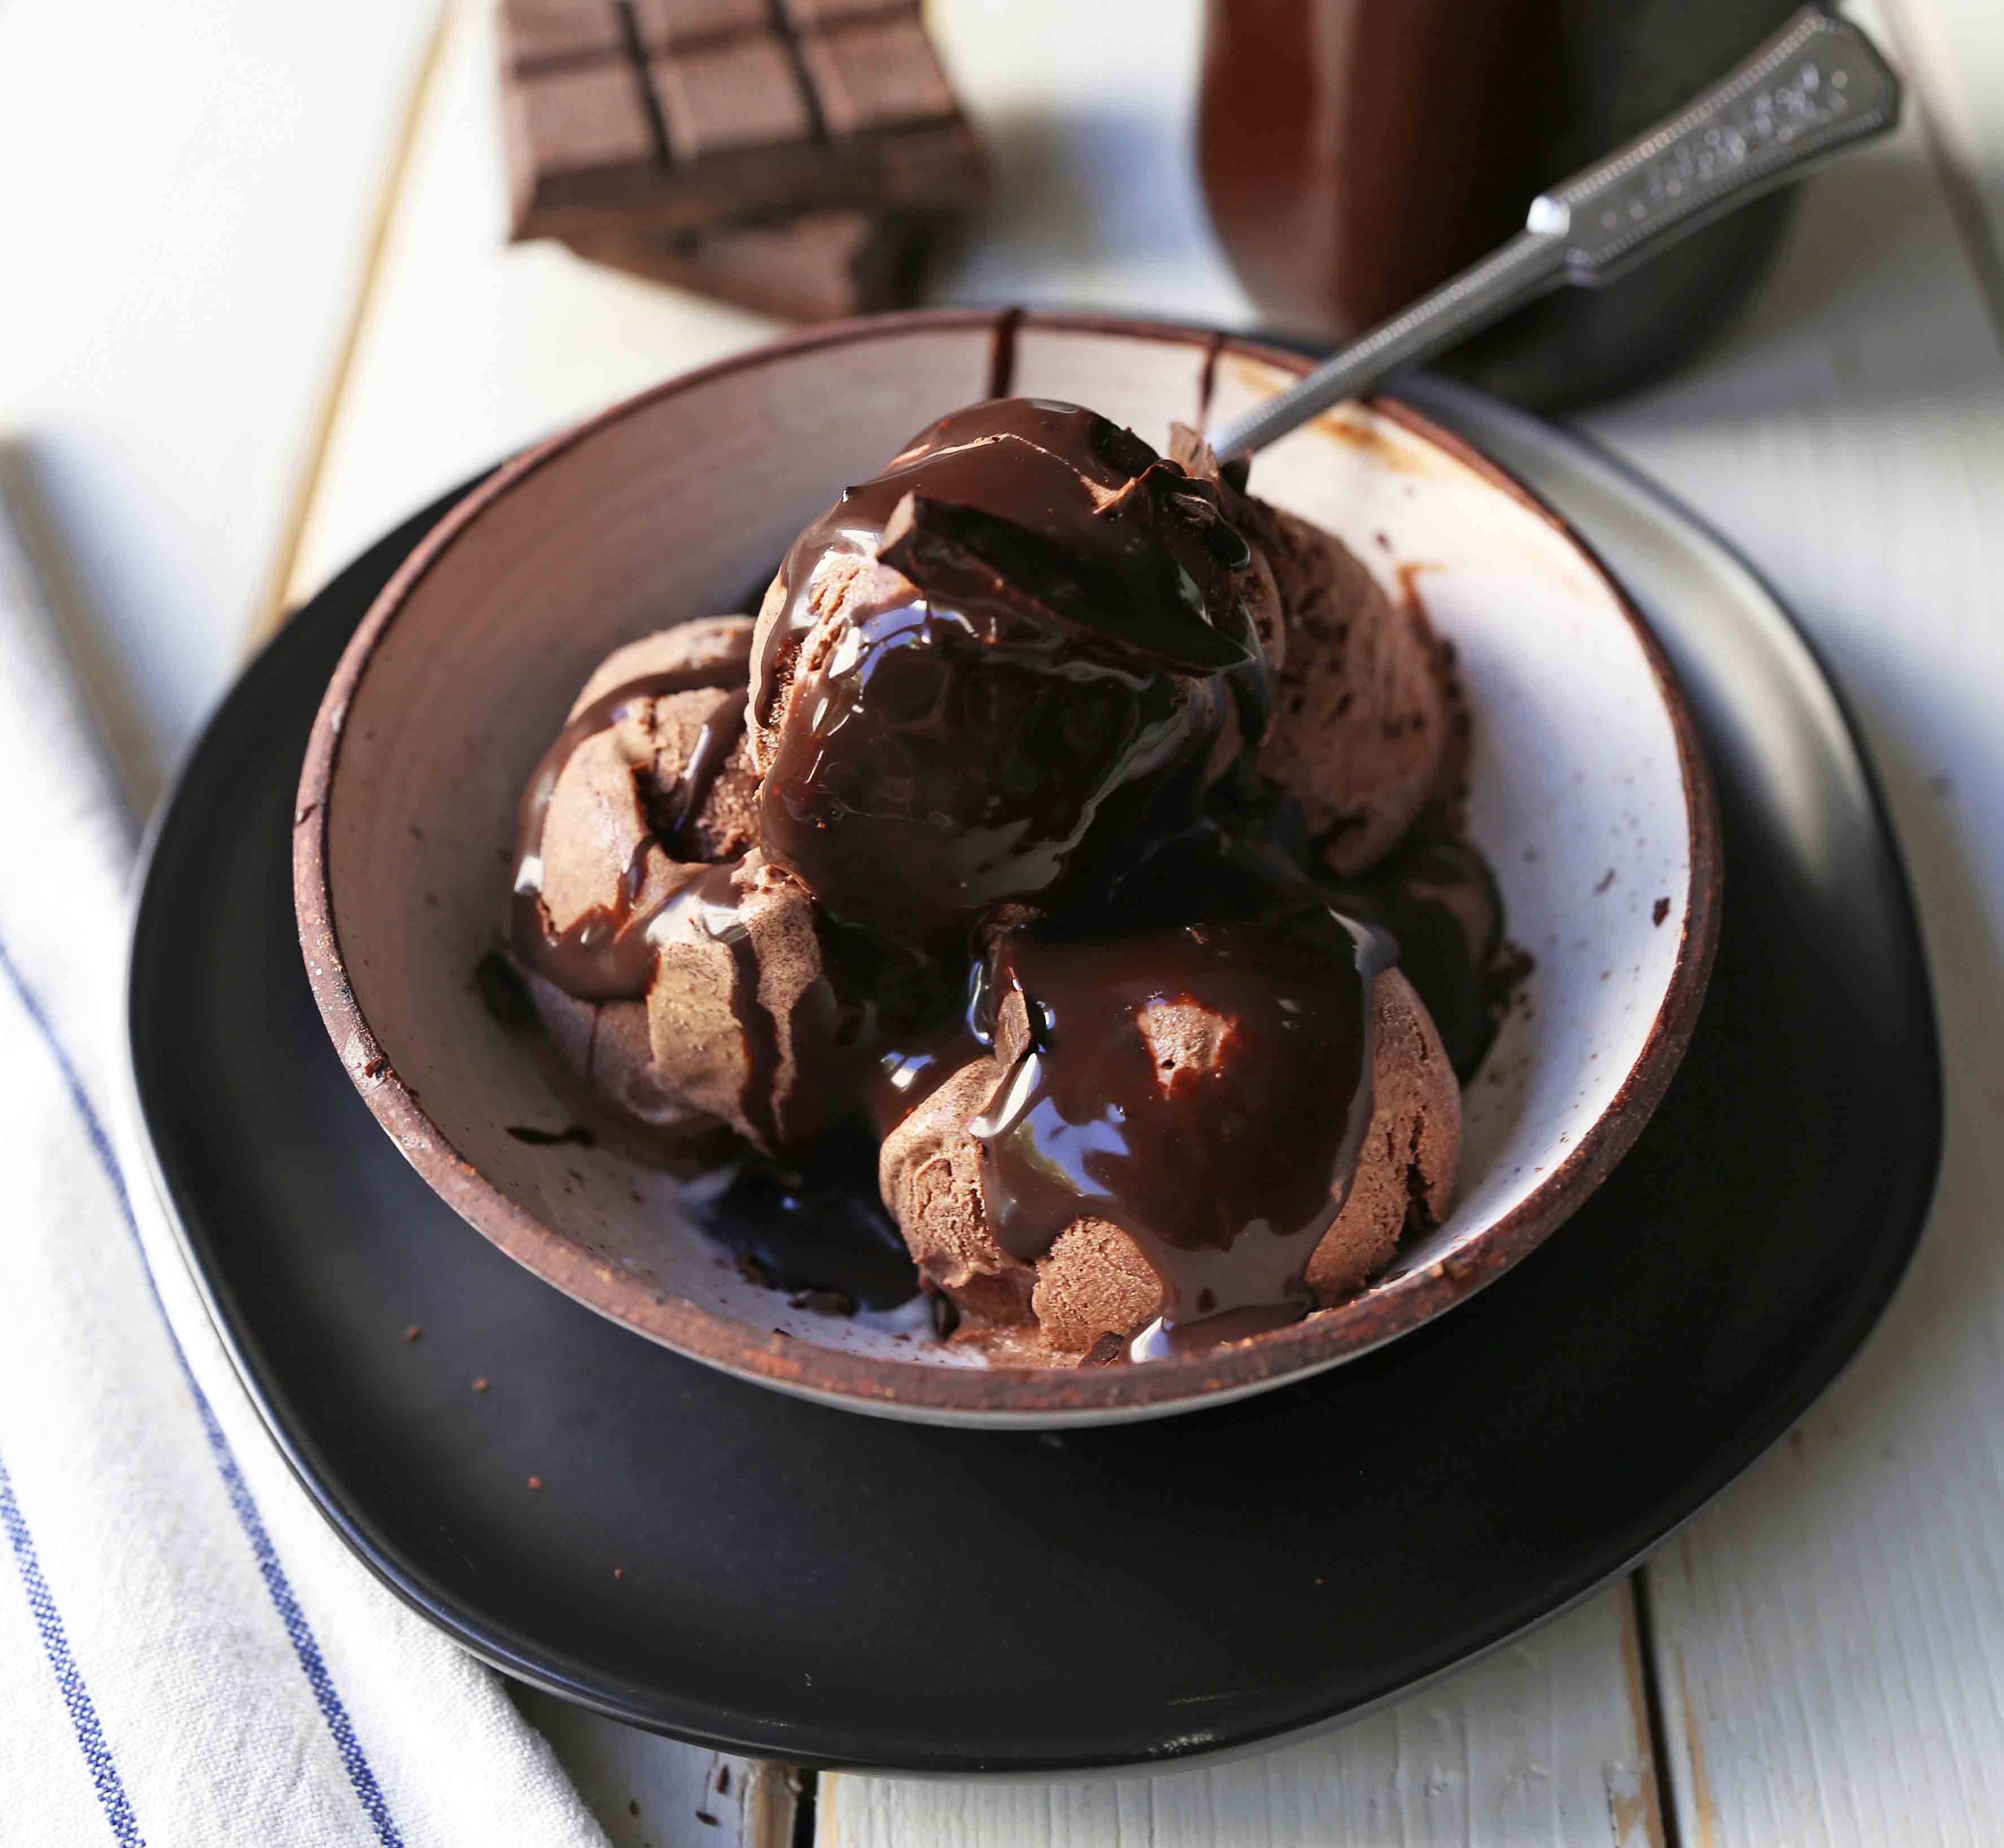 How to Make Chocolate Ice Cream